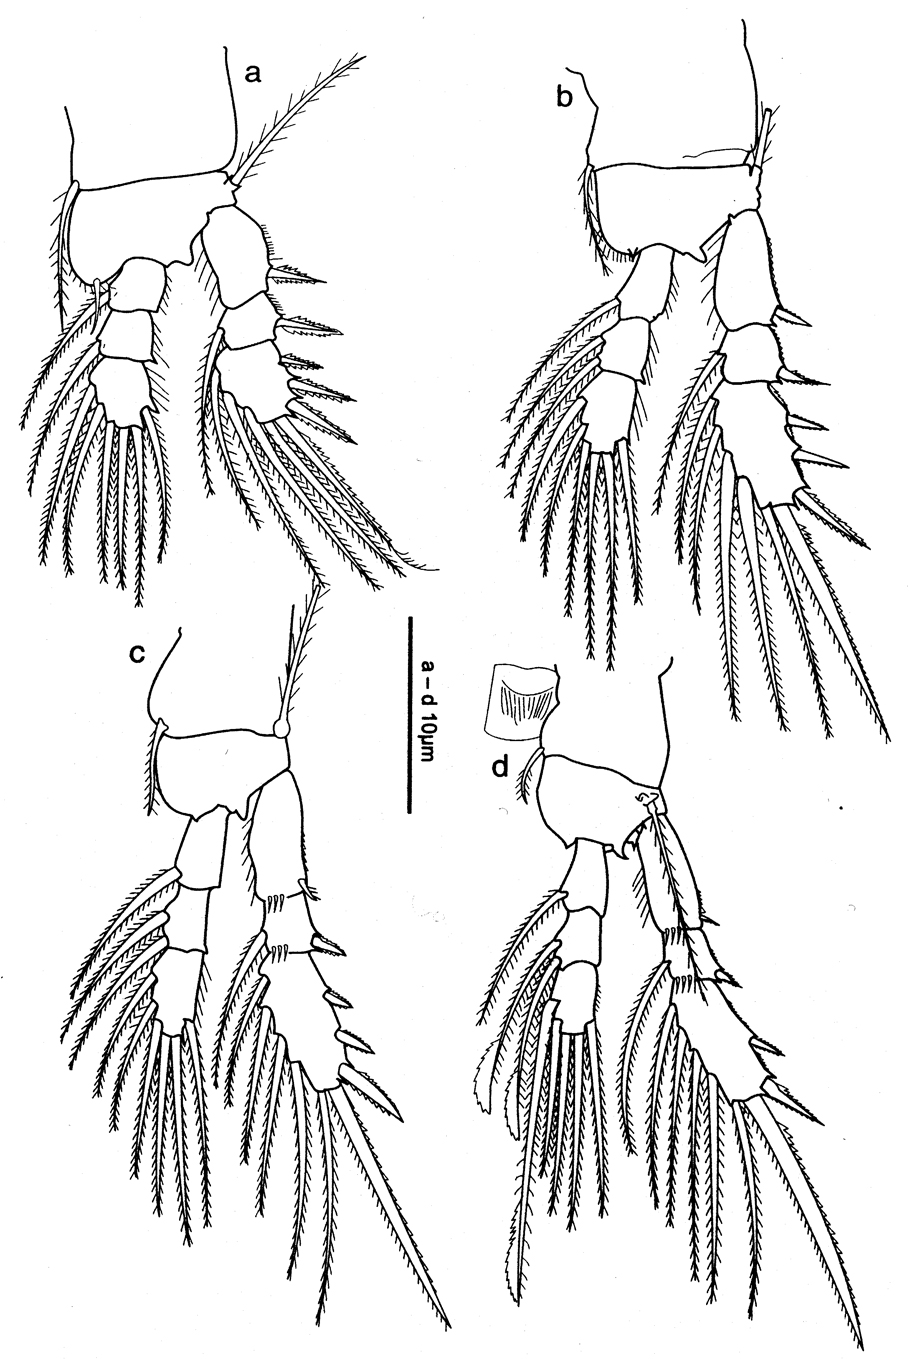 Species Oithona robertsoni - Plate 3 of morphological figures